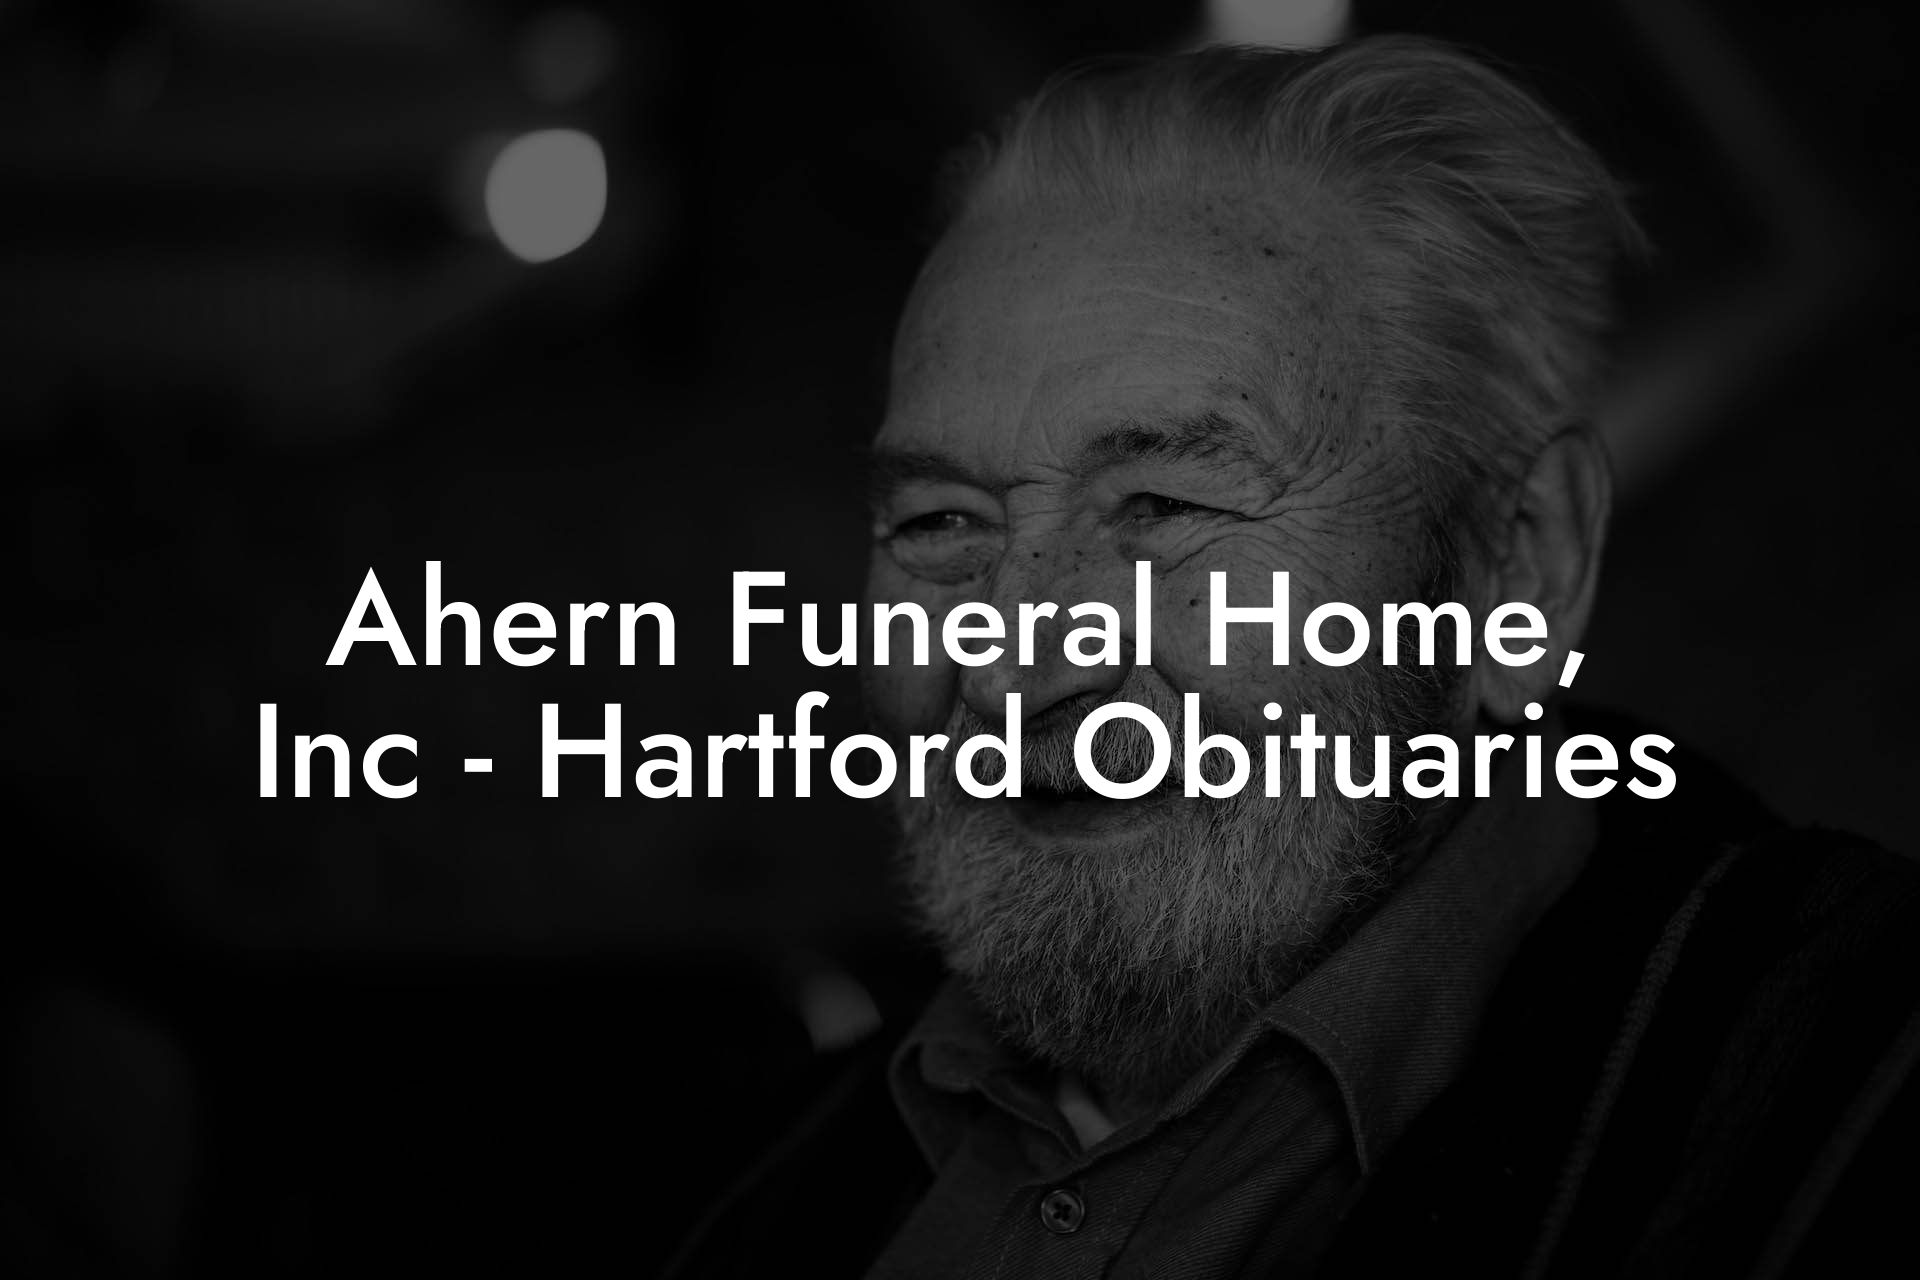 Ahern Funeral Home, Inc - Hartford Obituaries